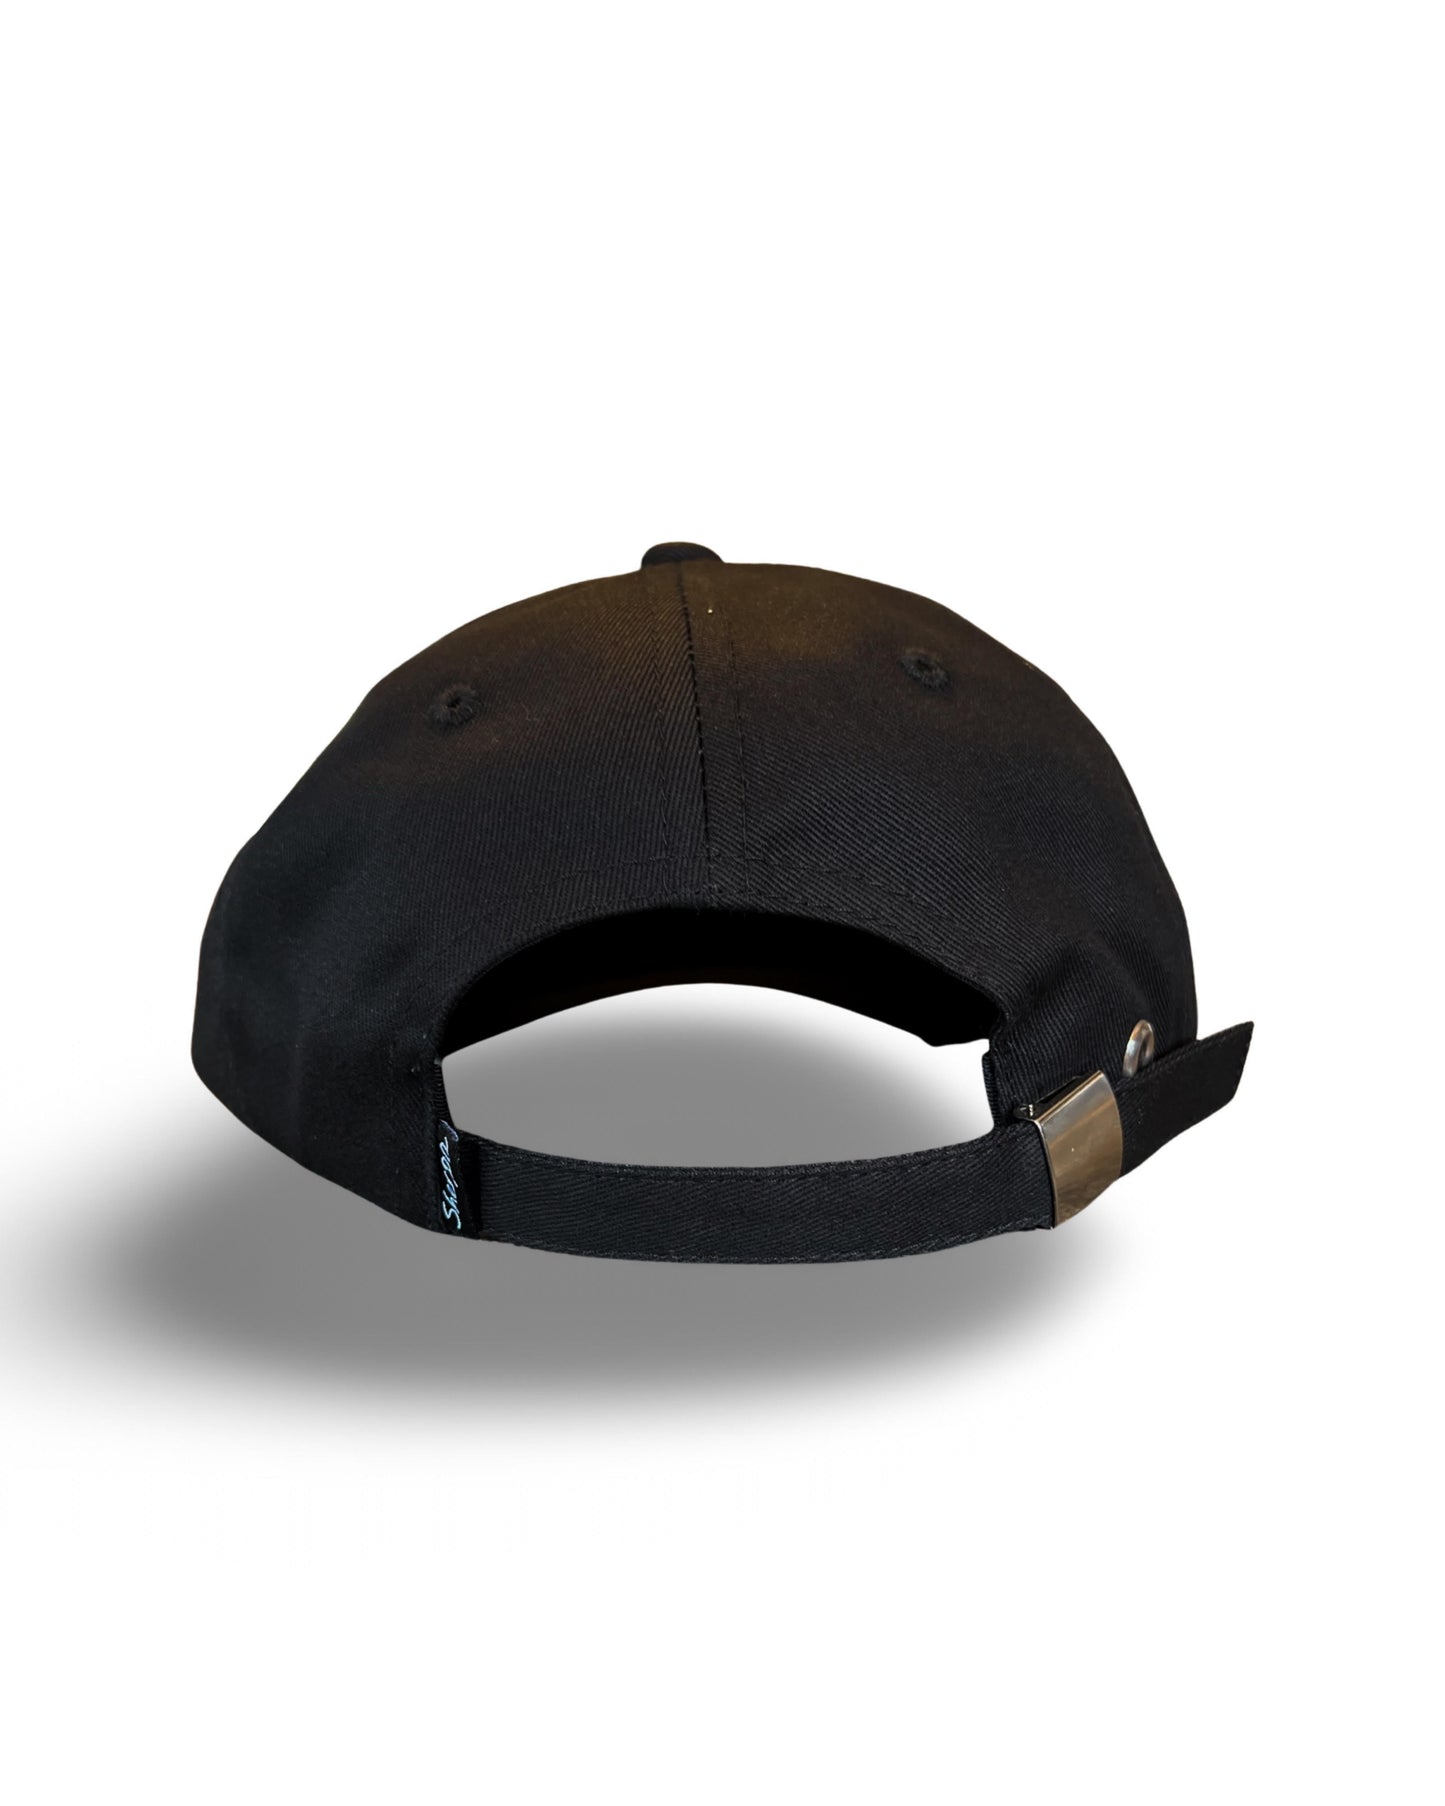 Skinz Sherpa Black Dad Hat